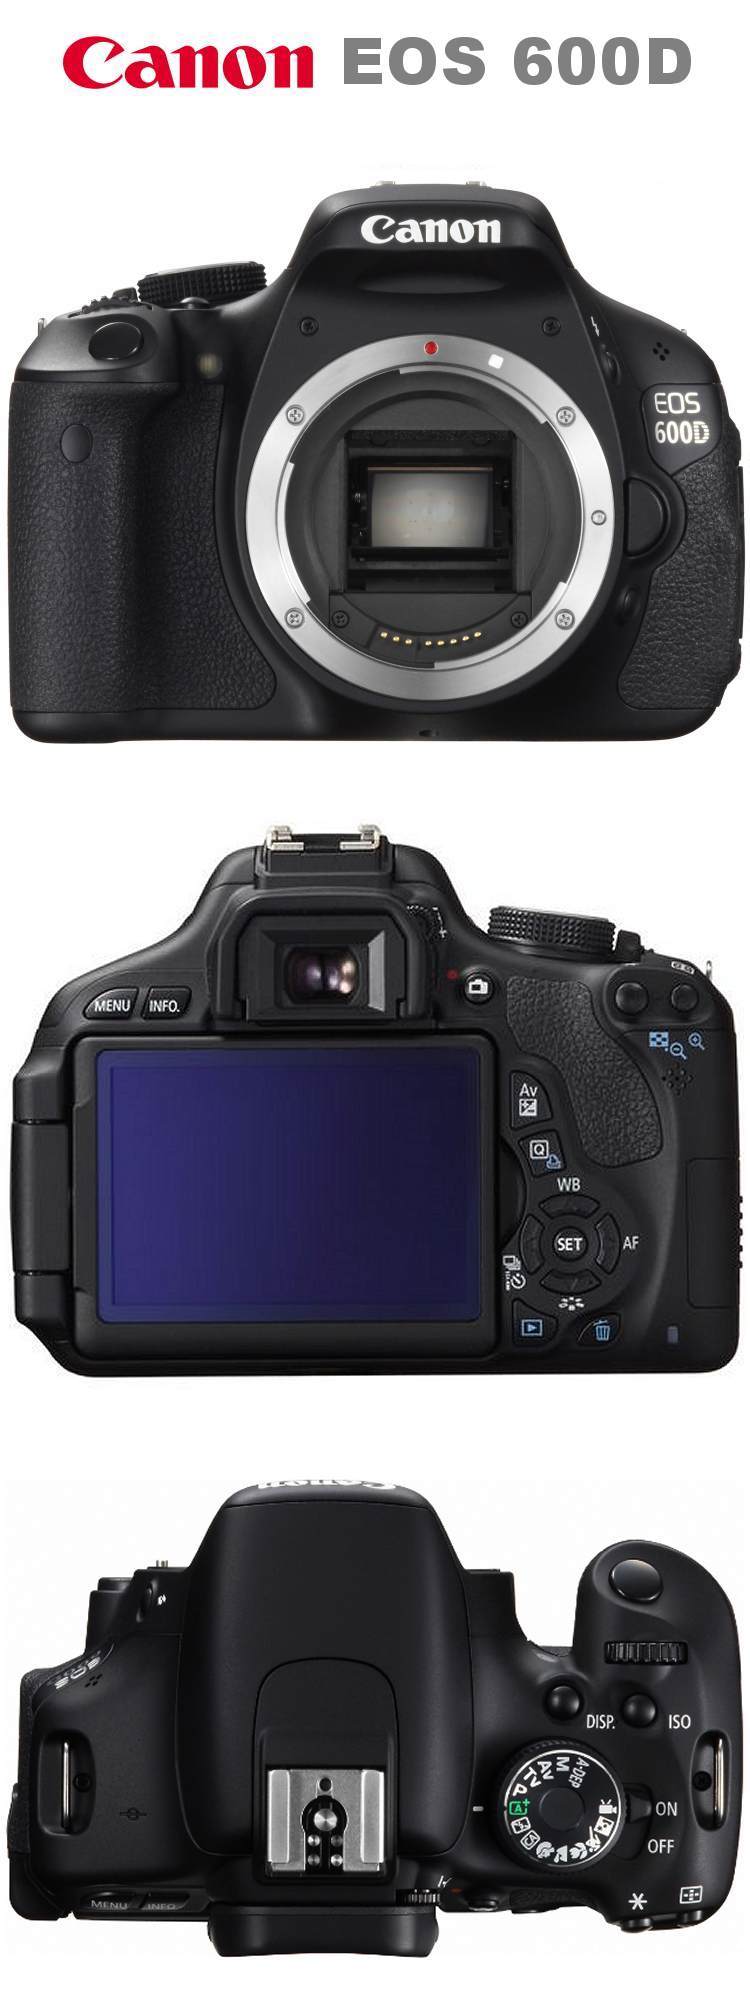 Bild: Canon EOD 600D Front / Back / Top Ansicht